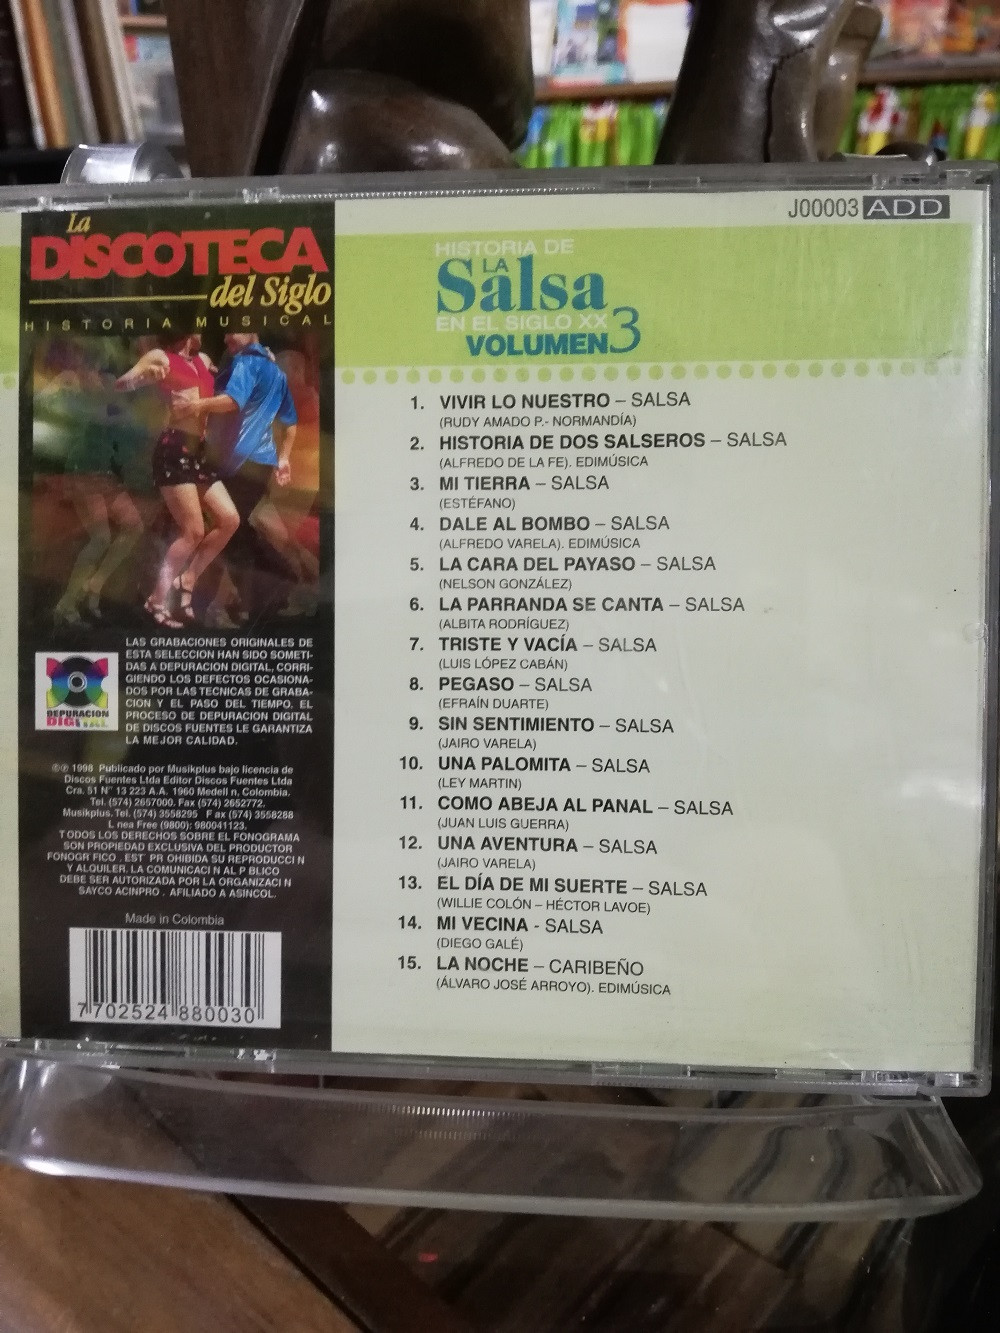 Imagen CD HISTORIA DE LA SALSA EN EL SIGLO XX - HISTORIA DE LA SALSA EN EL SIGLO XX VOL. 3 2